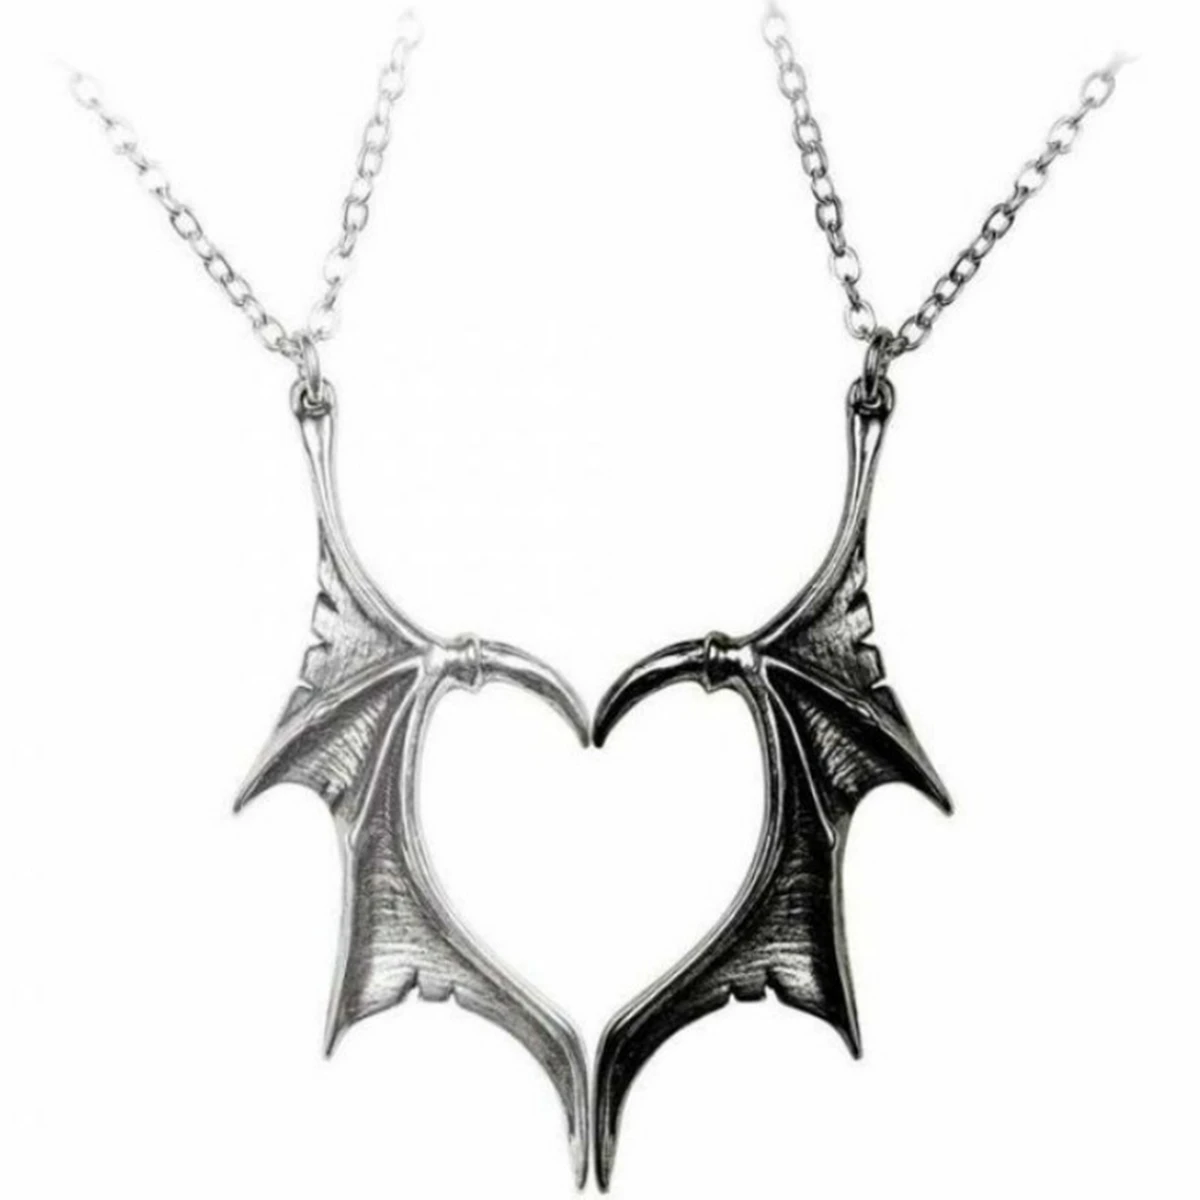 Neo Gothic Couple Necklace White Black Dragon Wing Heart Pendant Romantic Love Jewelry Fashion Accessories Valentine's Day Gift